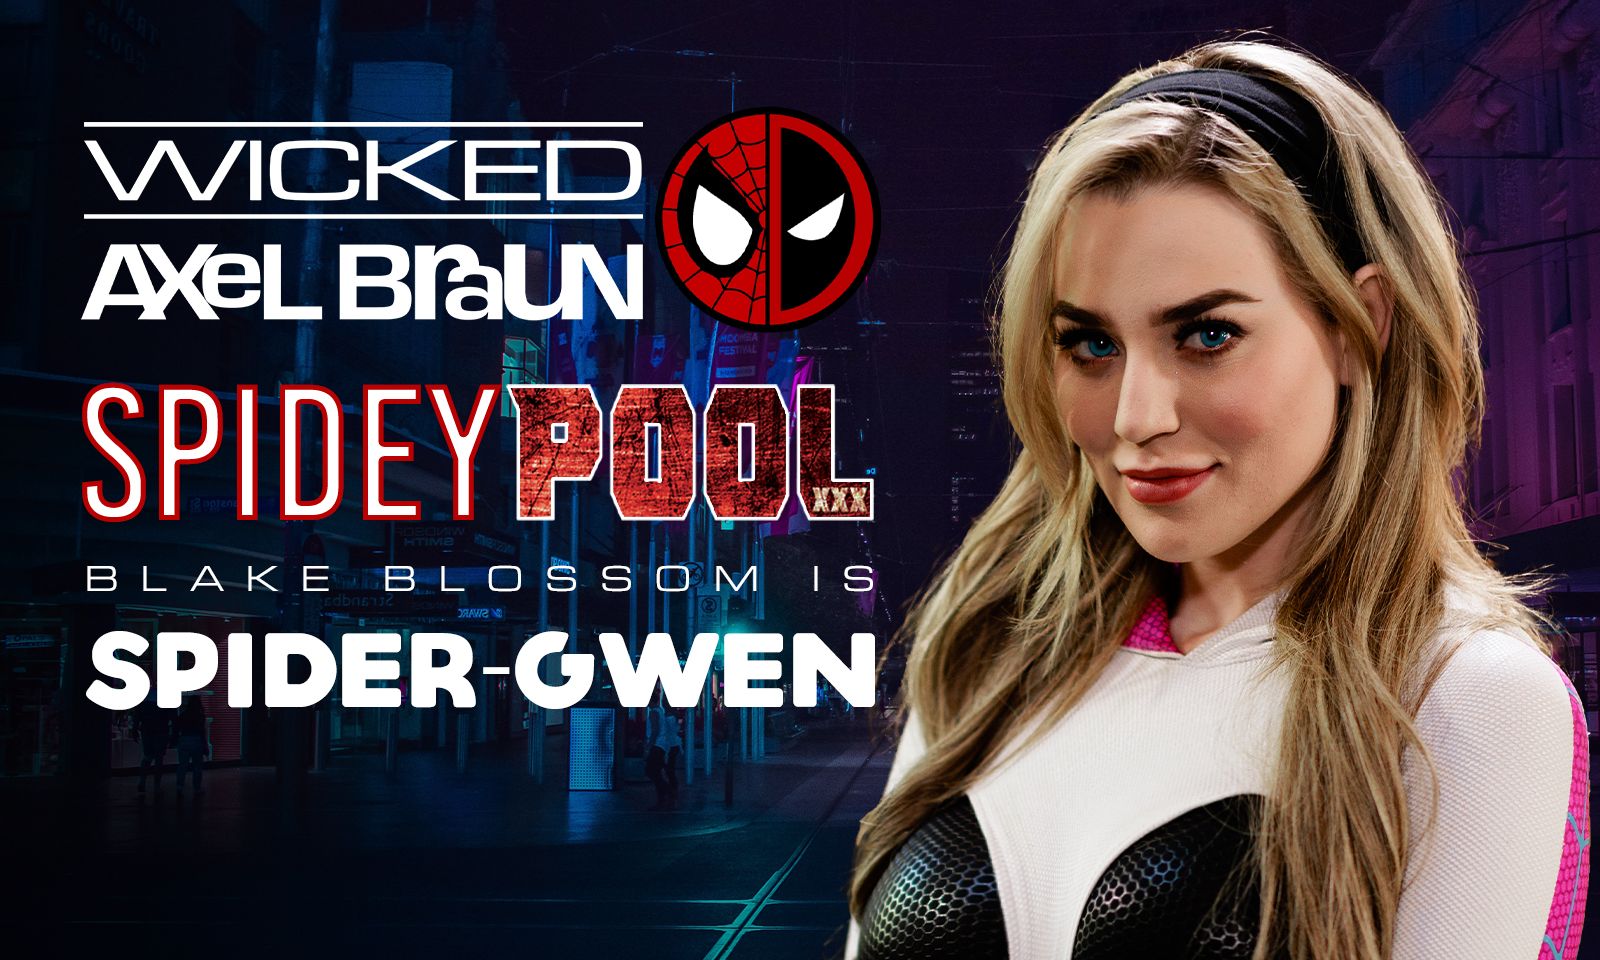 Blake Blossom Cast as Spider-Gwen in Axel Braun's 'Spideypool' | AVN